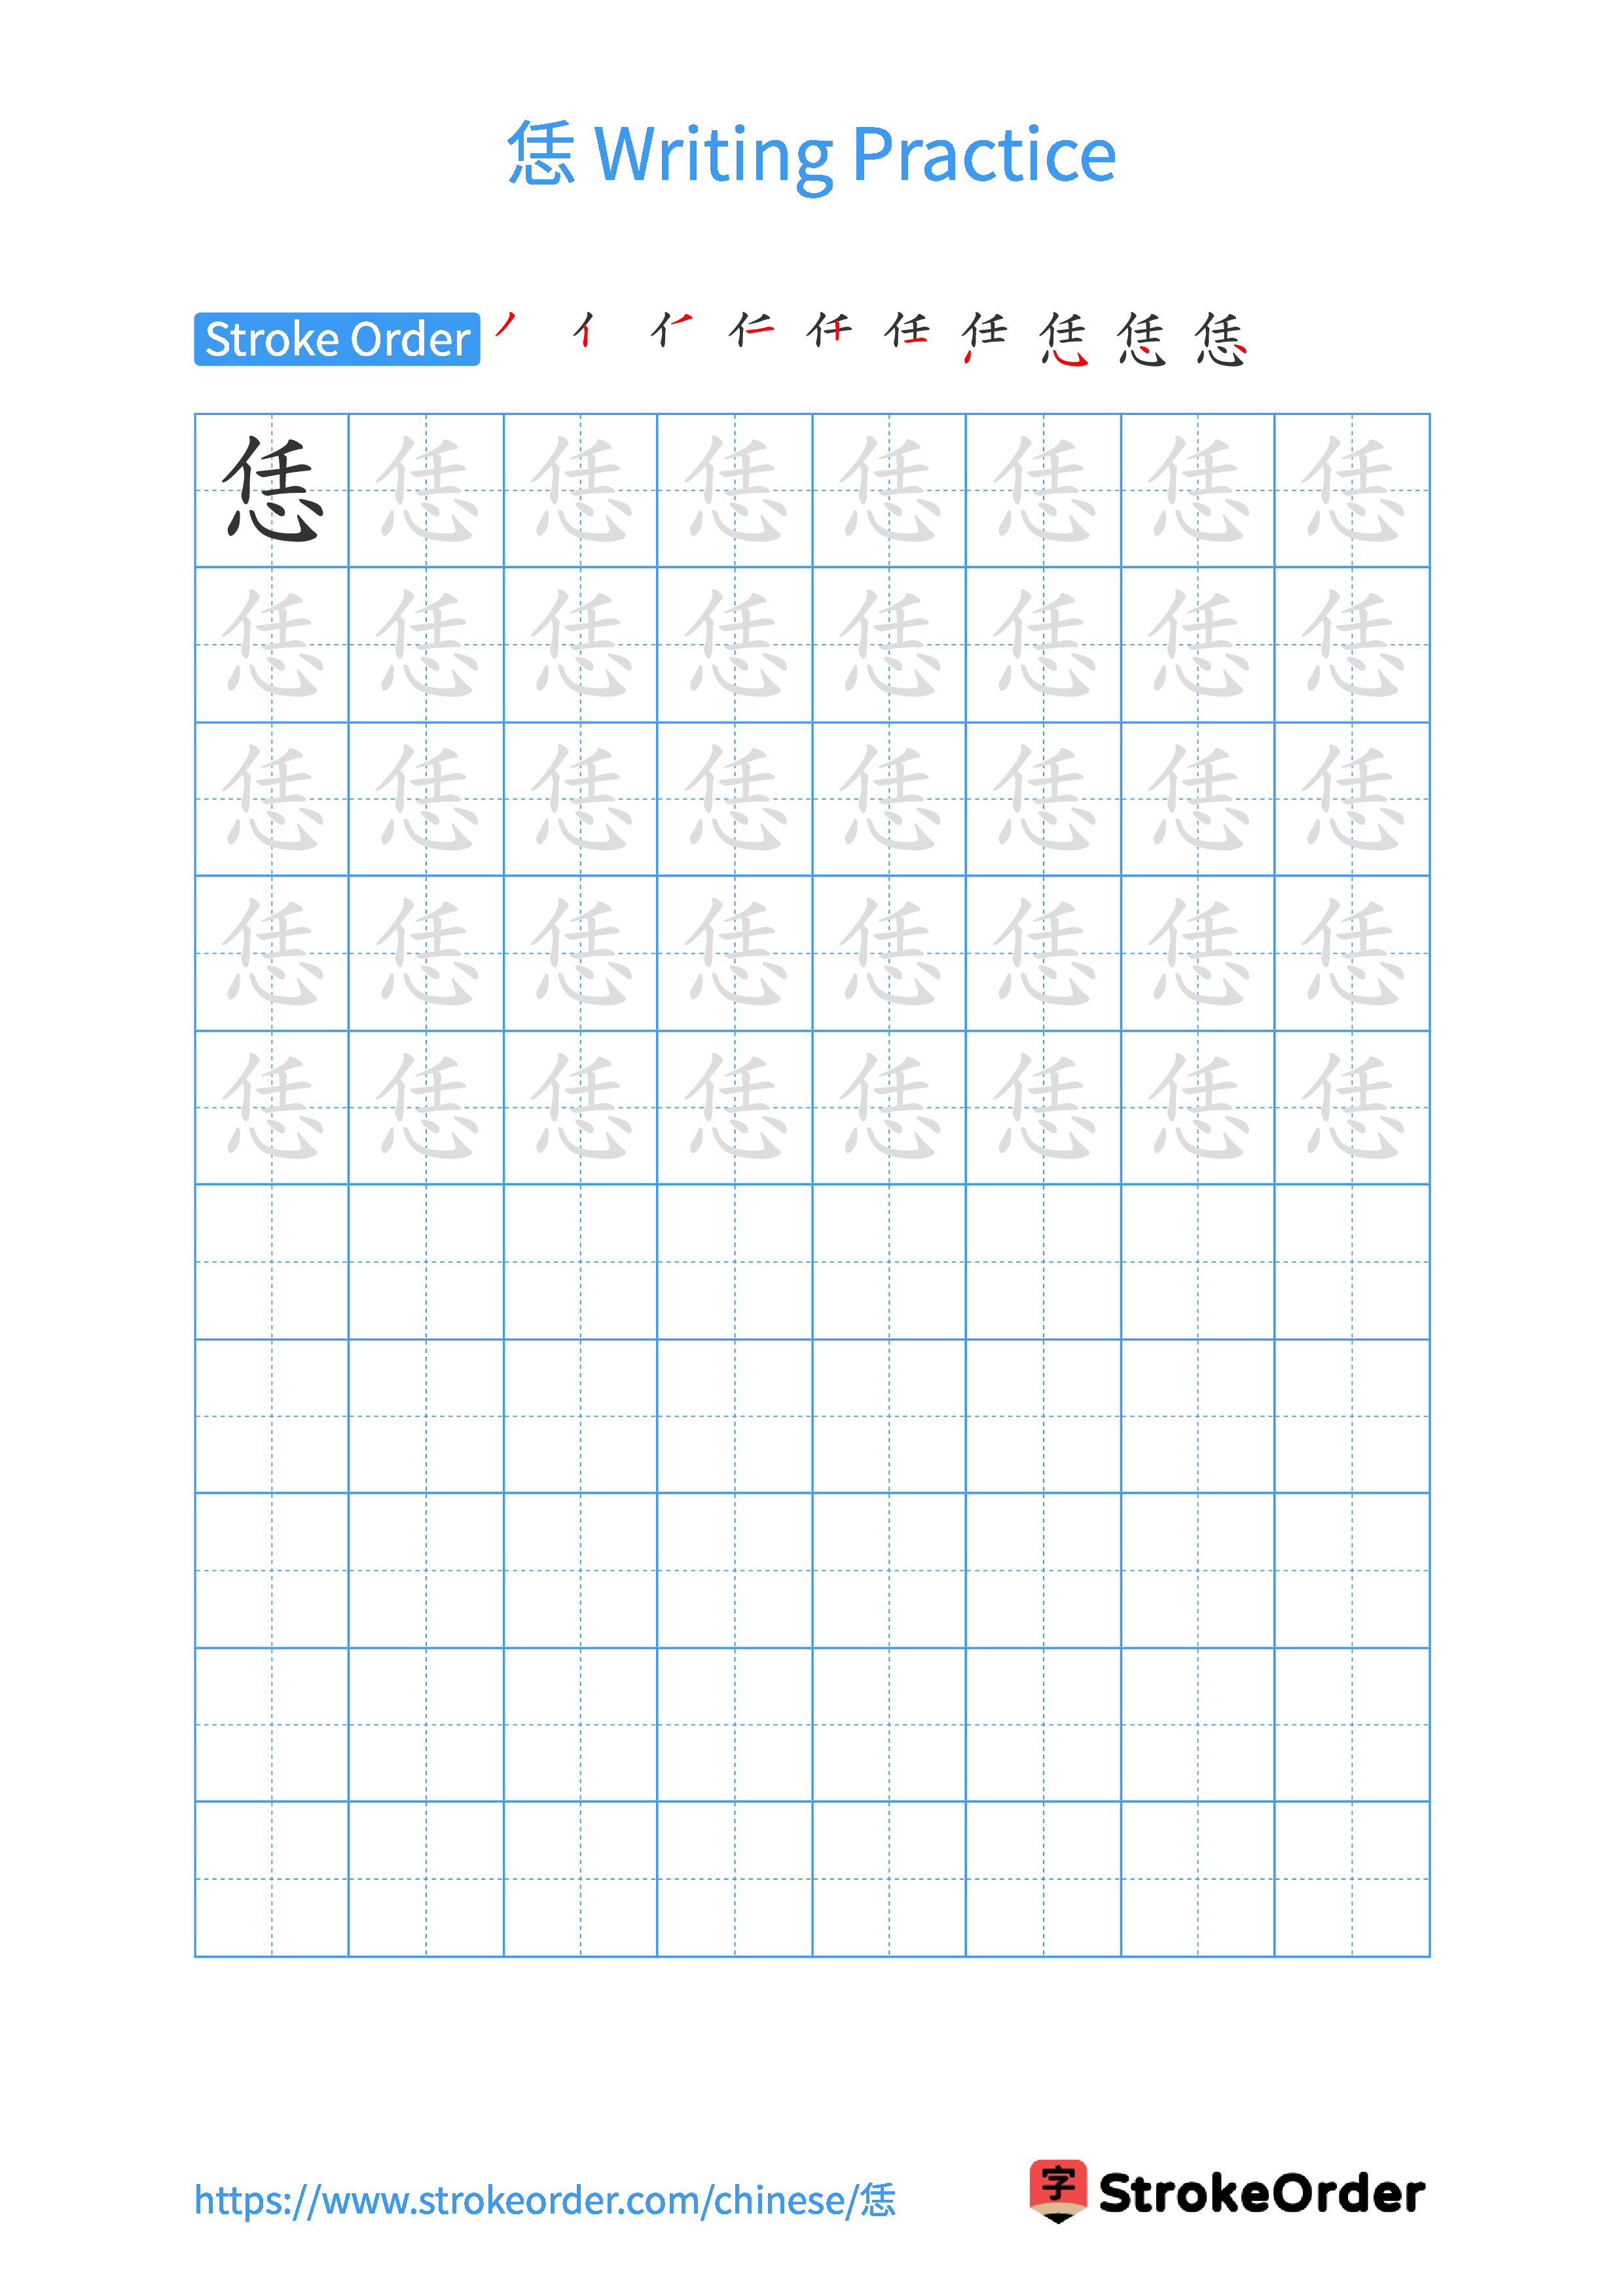 Printable Handwriting Practice Worksheet of the Chinese character 恁 in Portrait Orientation (Tian Zi Ge)